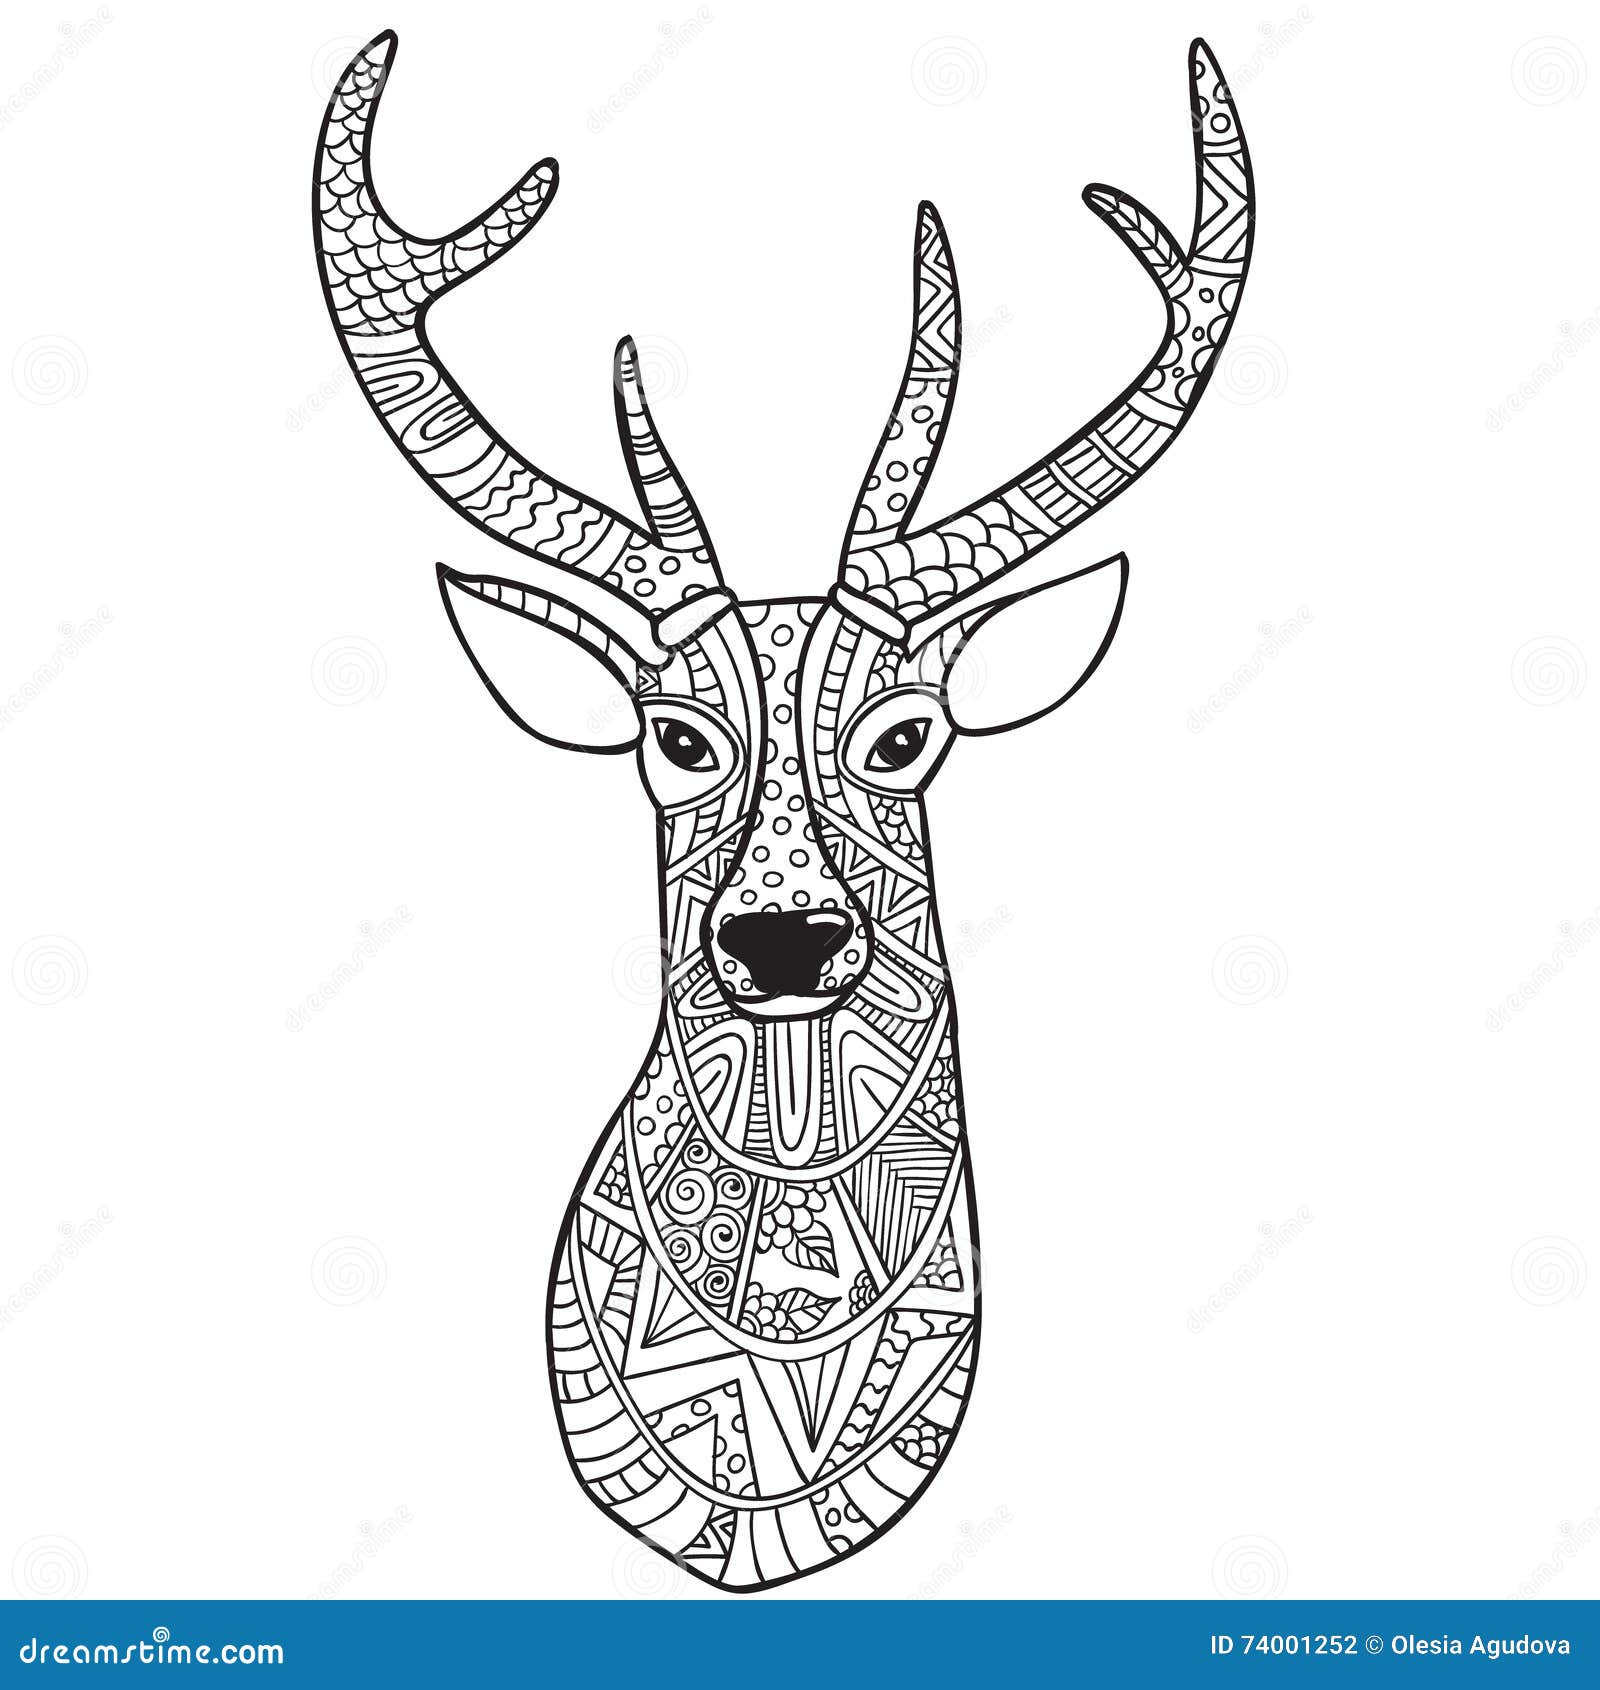 deer handdrawn reindeer with ethnic doodle pattern